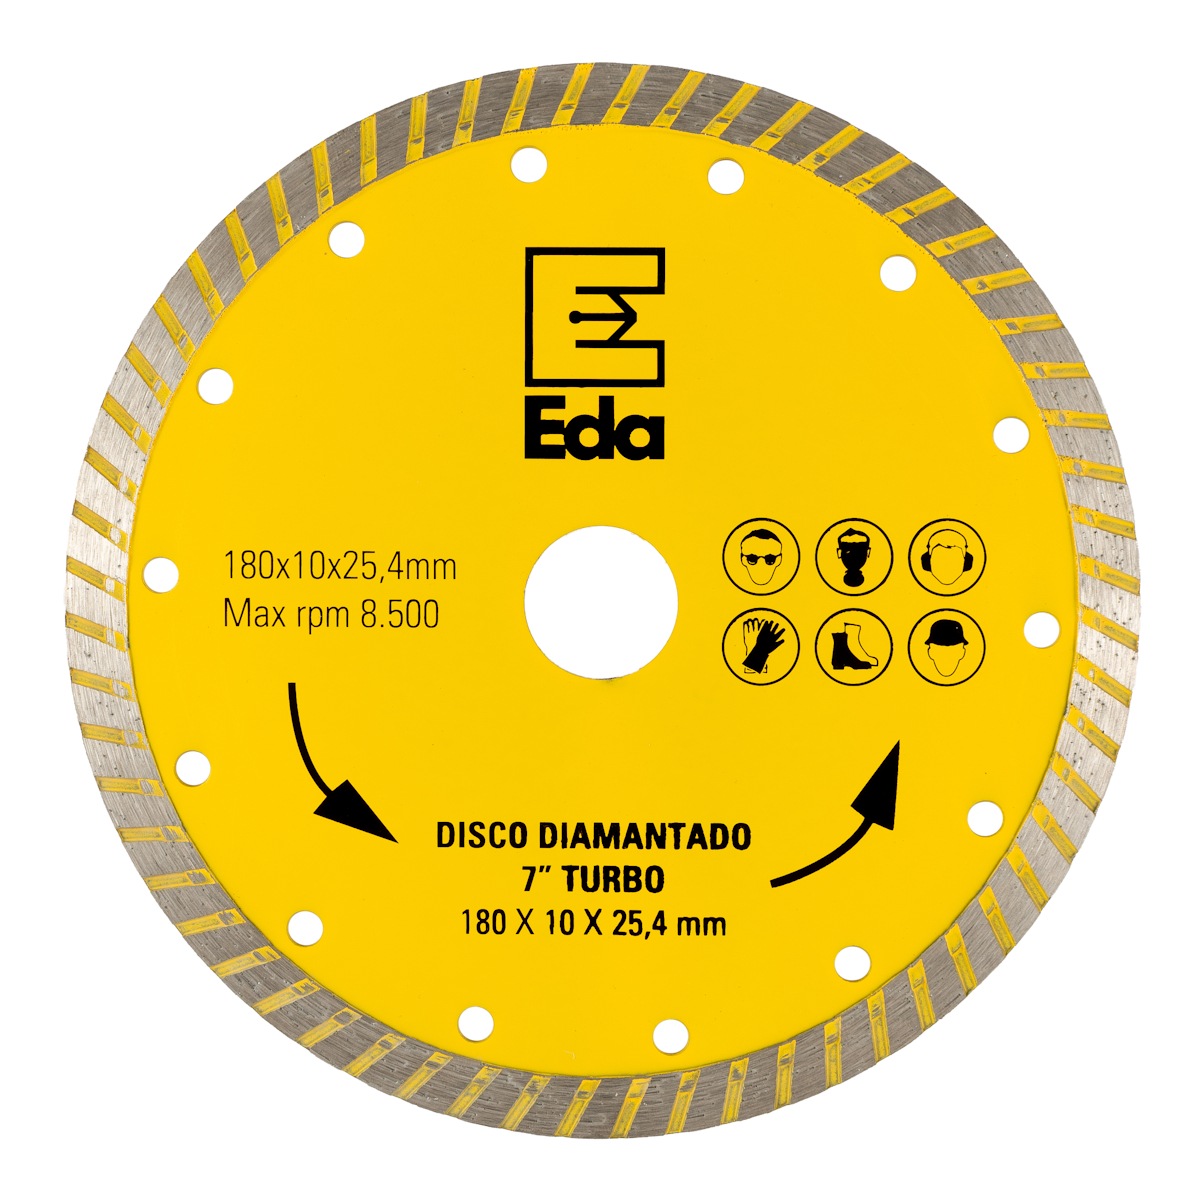 Disco Diamantado 7″ Turbo 180 x 10 x 25,4 mm